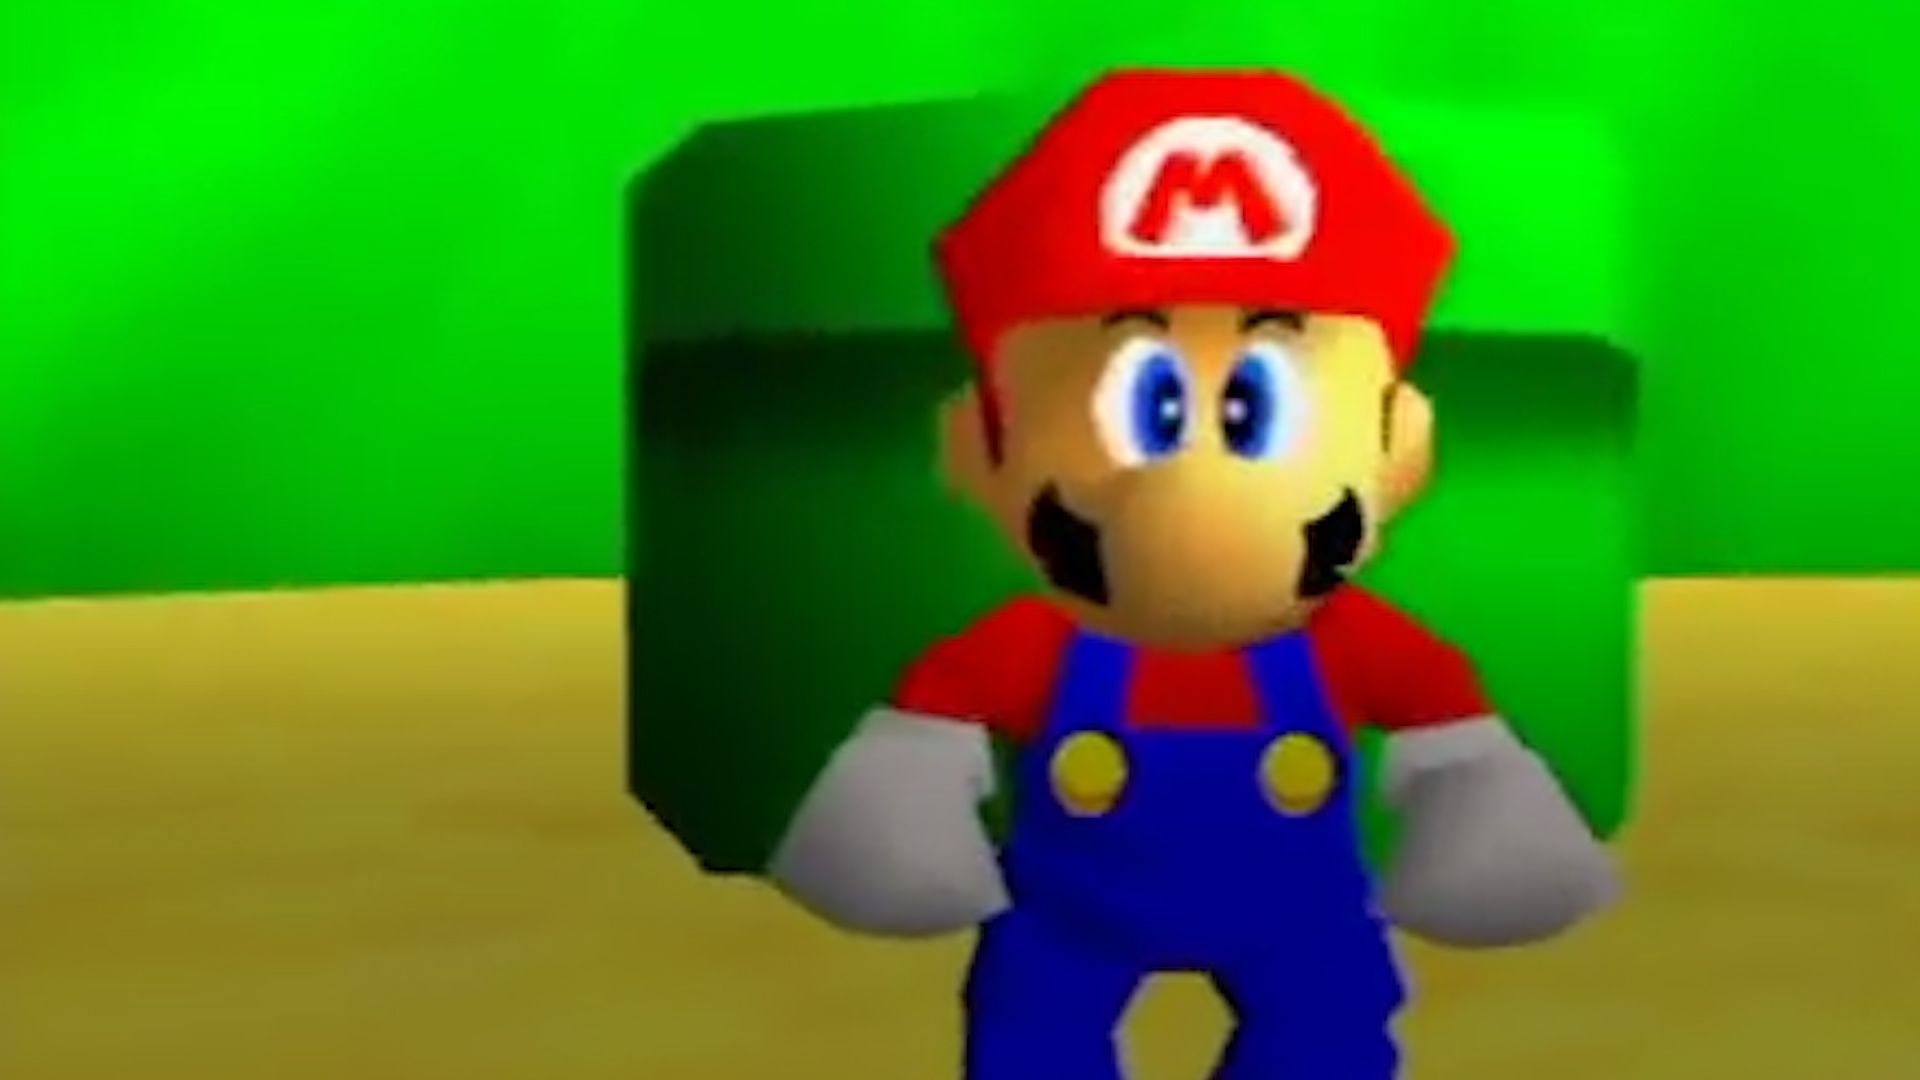 The Super Mario Bros. Movie on X: Wahoo! The #SuperMarioMovie is